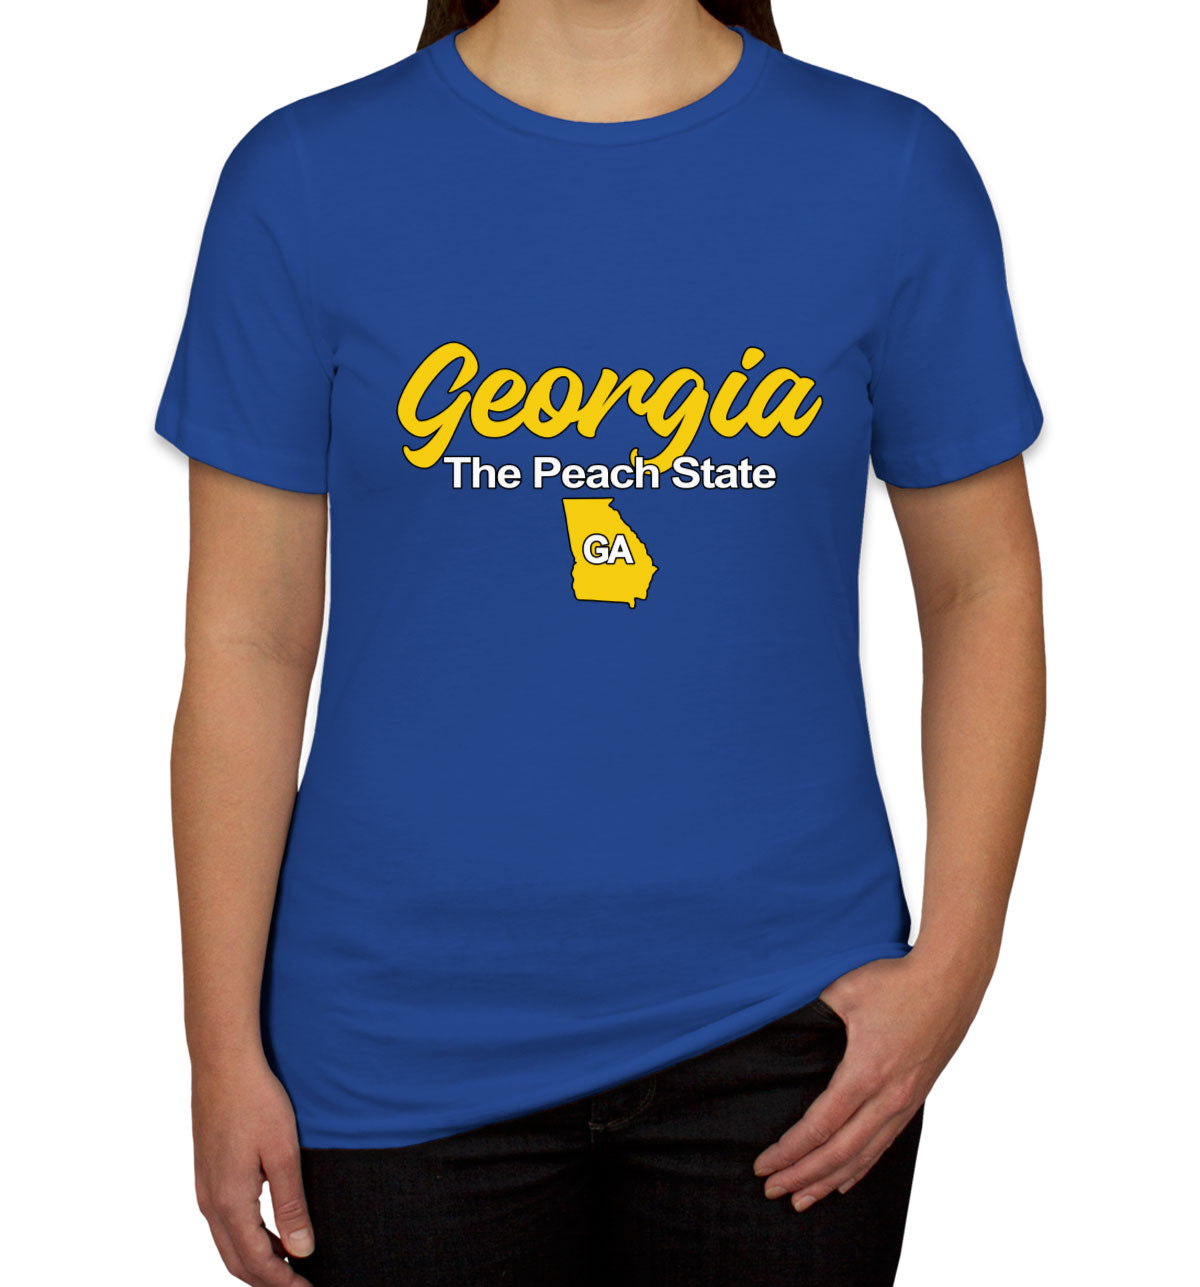 Georgia The Peach State Women's T-shirt